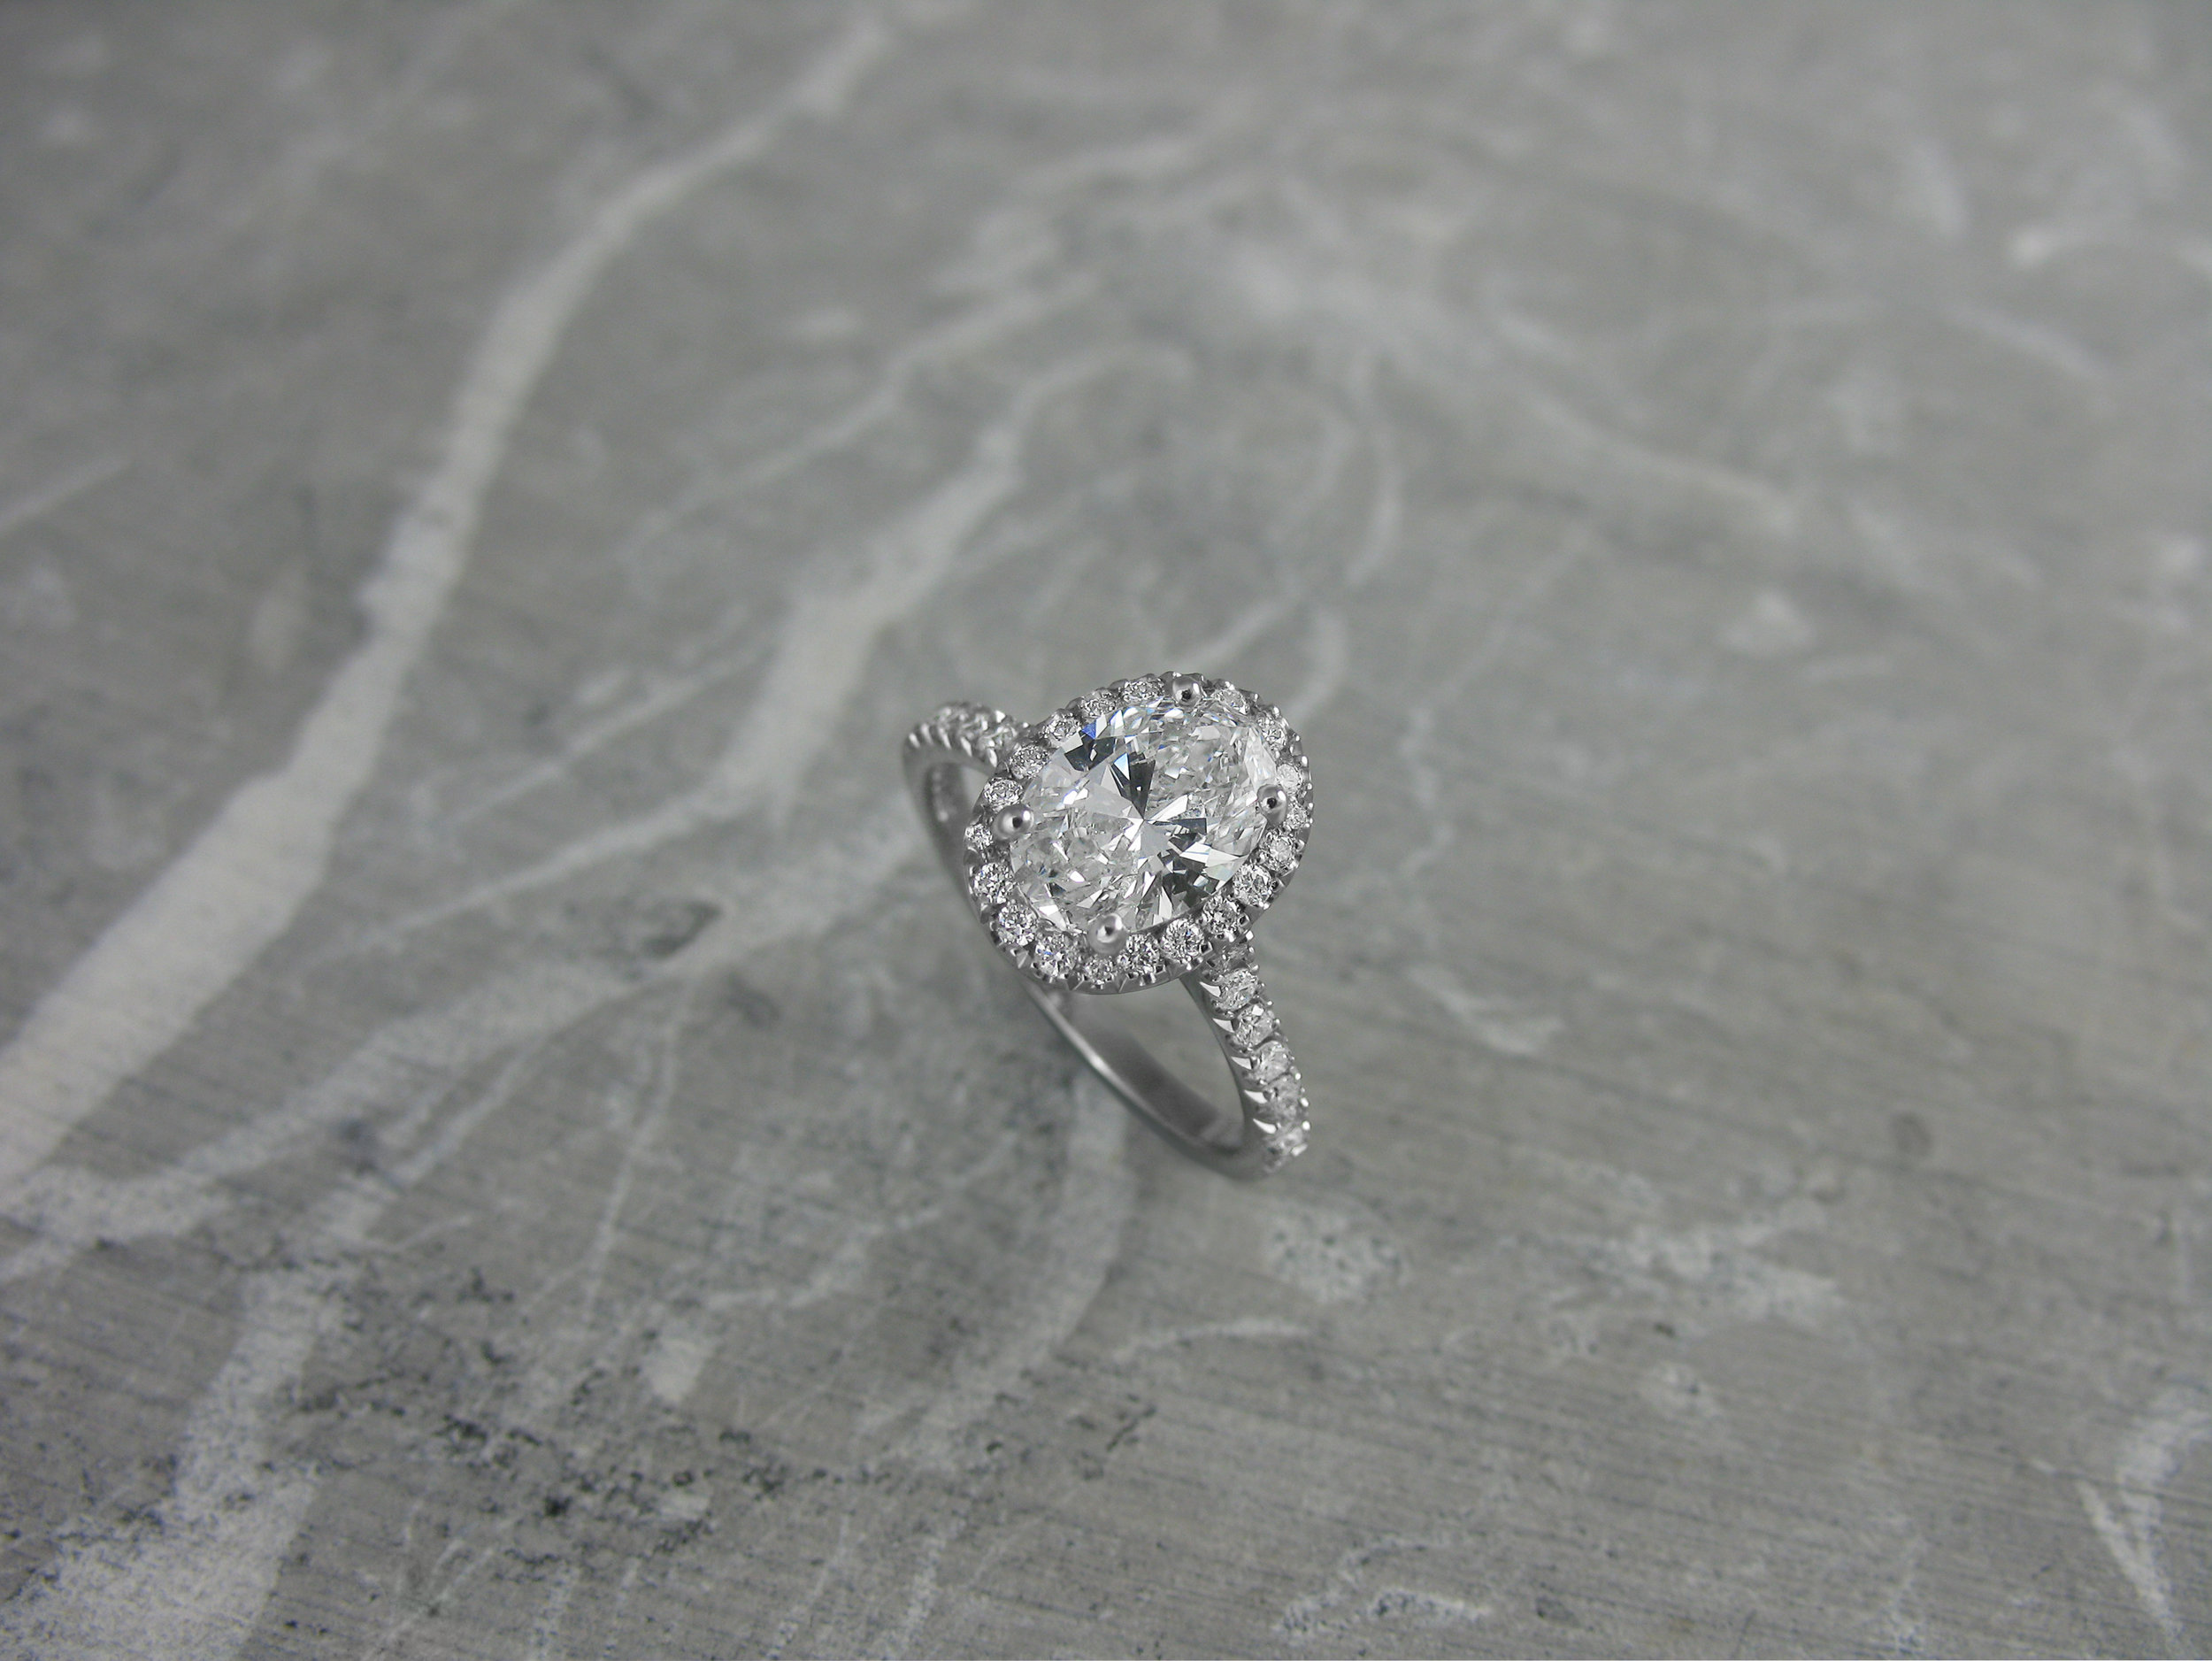 Oval diamond halo engagement ring